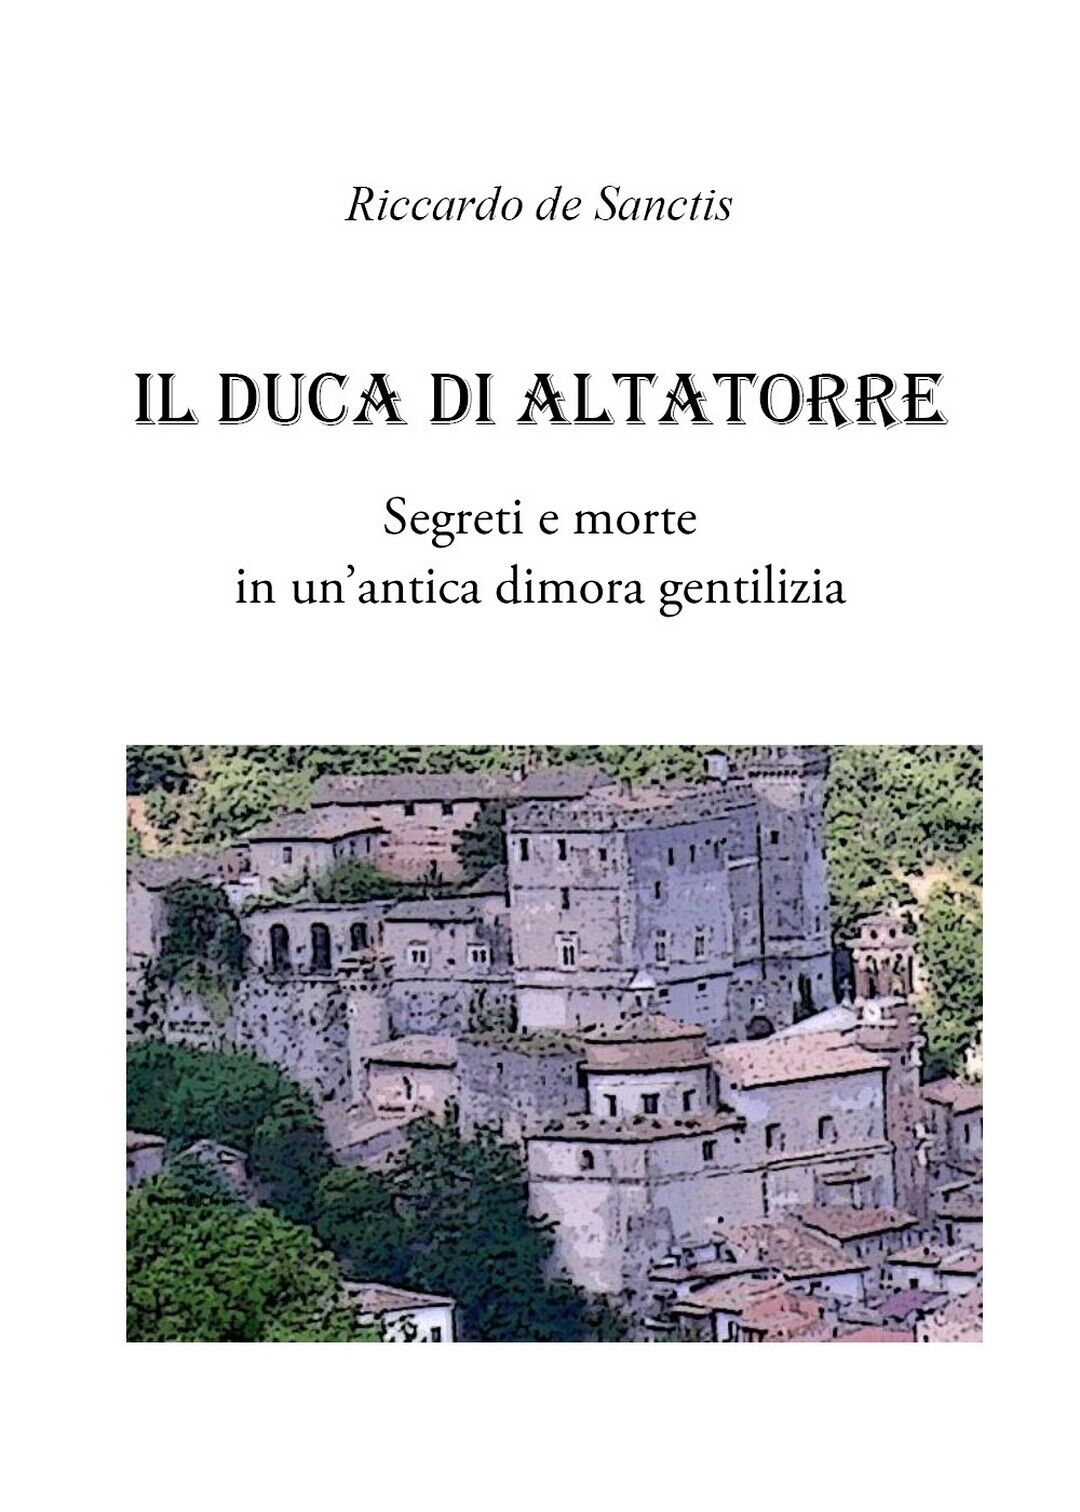 Il Duca di Altatorre  di Riccardo De Sanctis,  2020,  Youcanprint